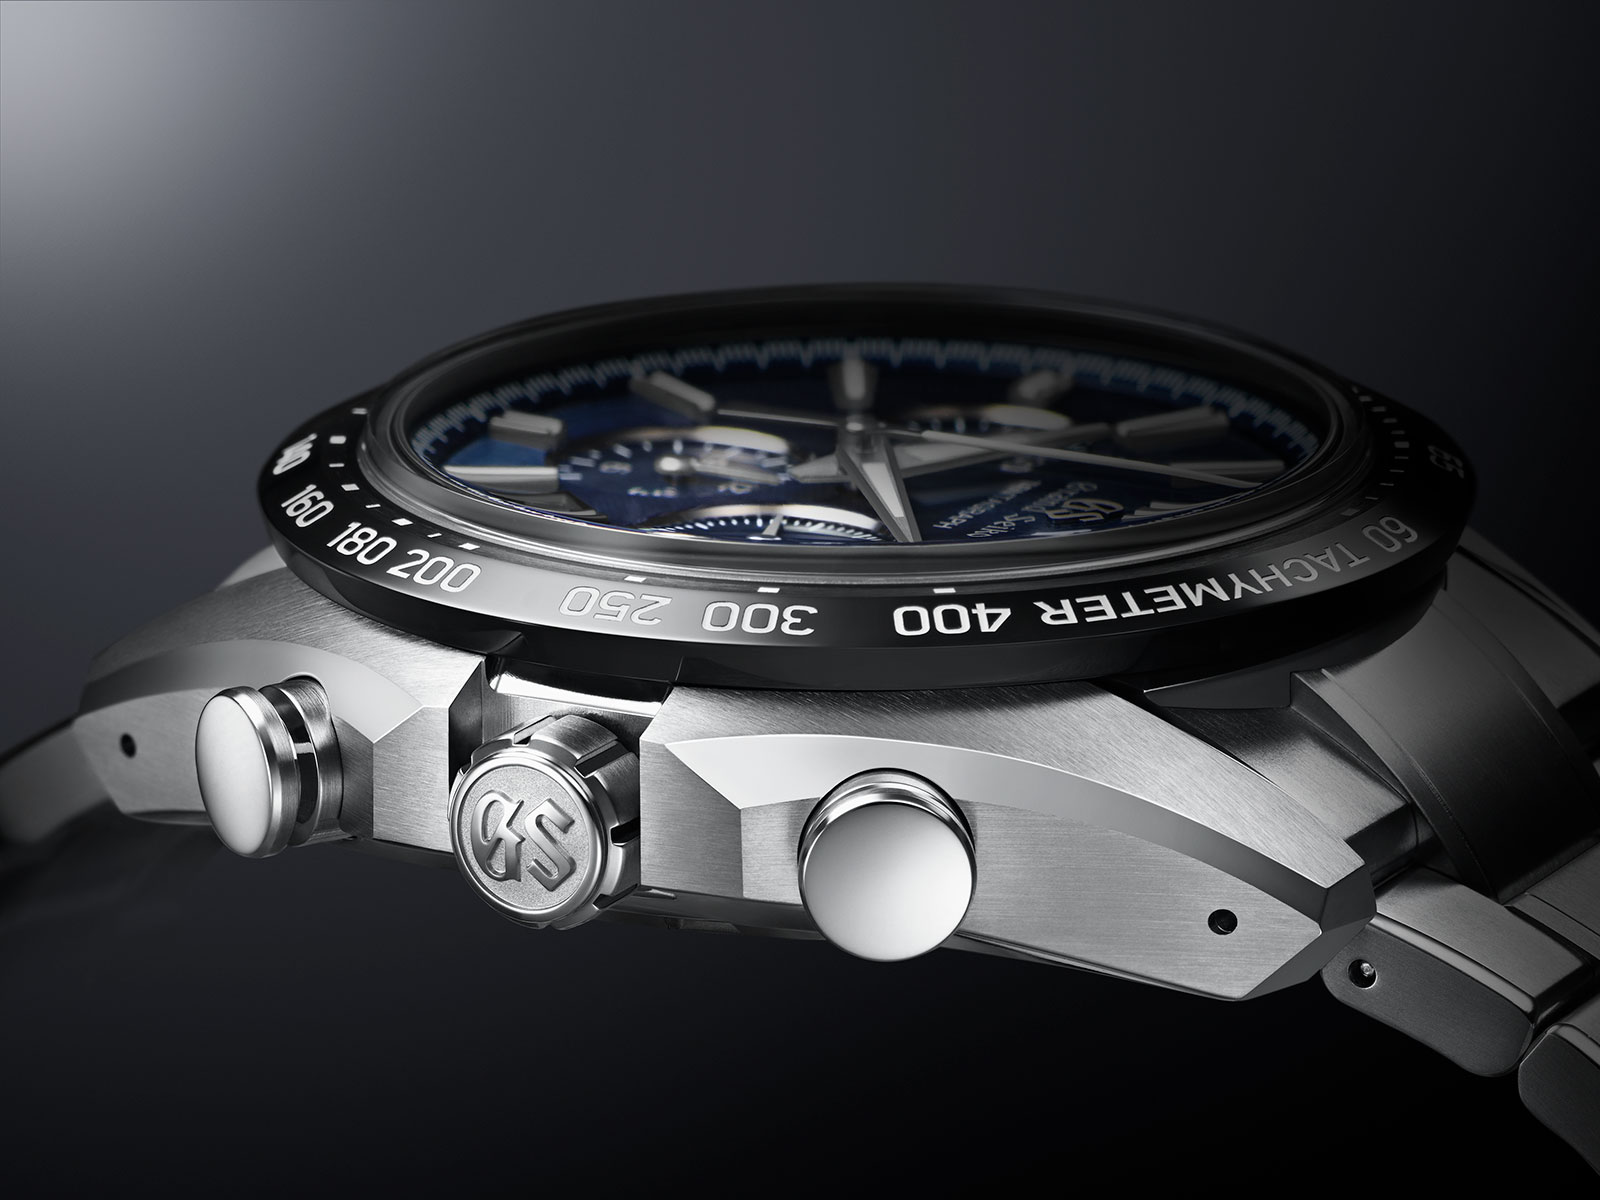 Grand Seiko Introduces the Tentagraph SLGC001 | SJX Watches